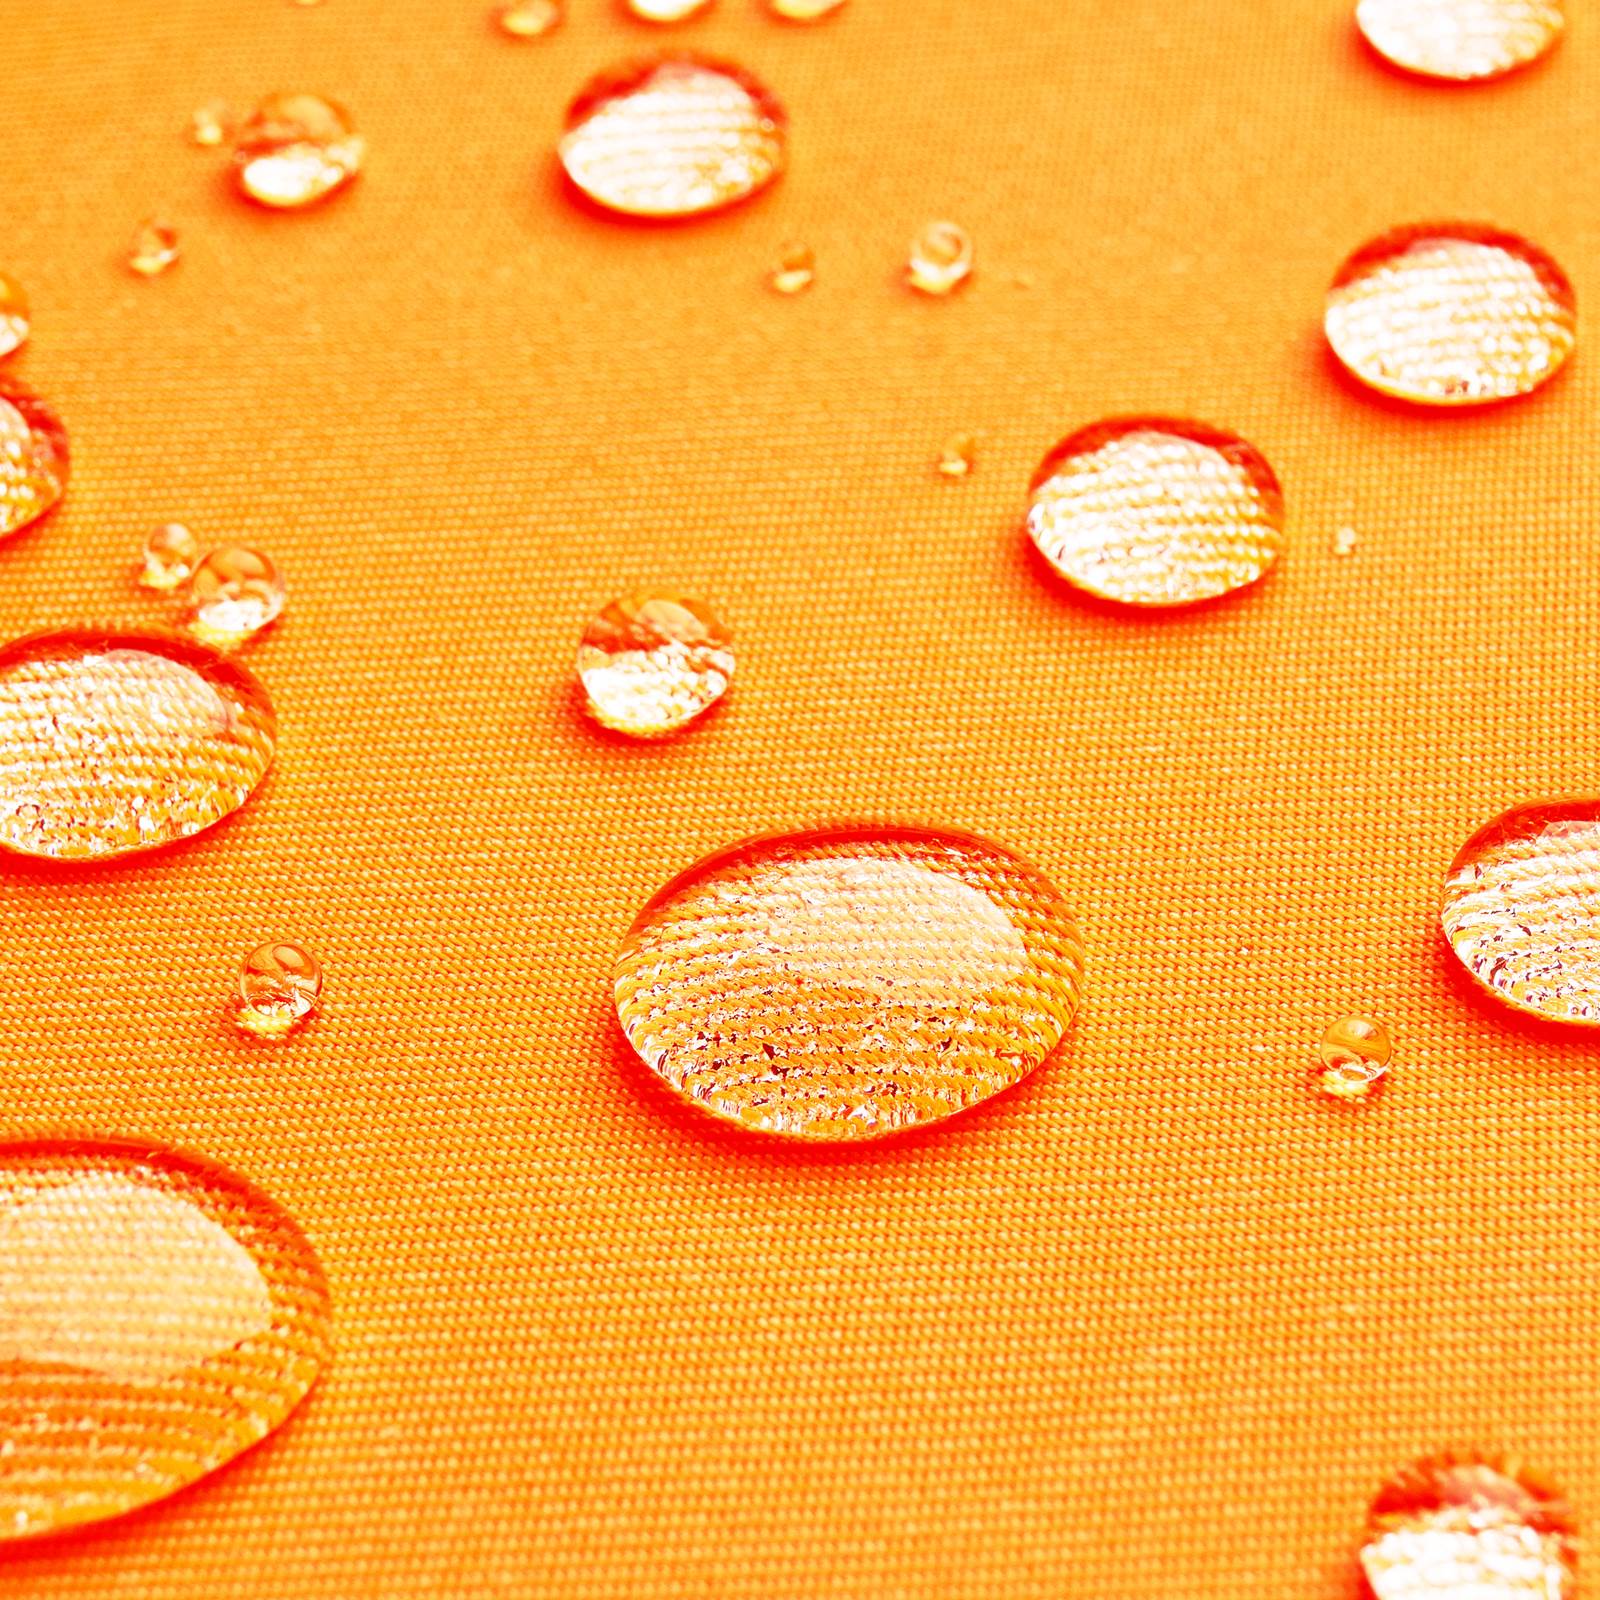 Mila - tissu anti UV - UPF 50+ (orange fluo EN20471)